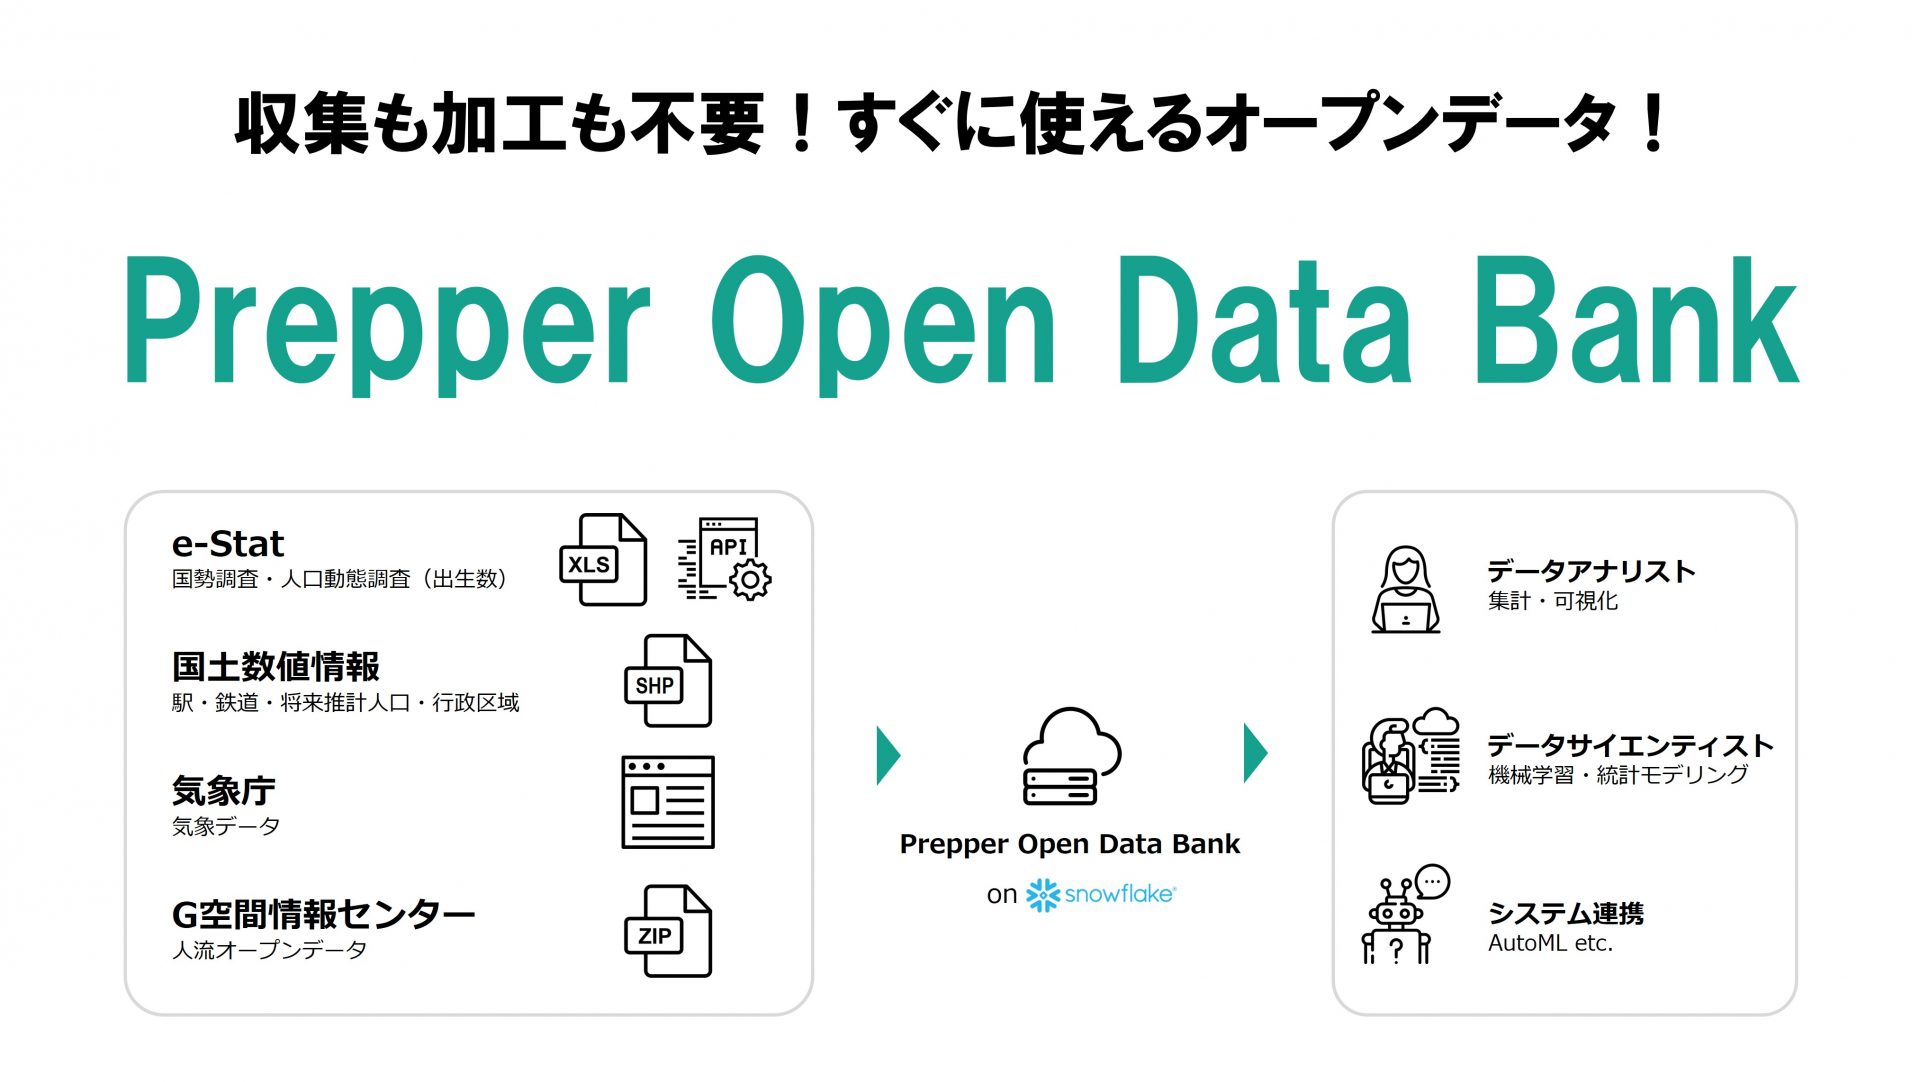 Prepper Open Data Bank,Prepper,SaaS,株式会社truestar,ソウグウ